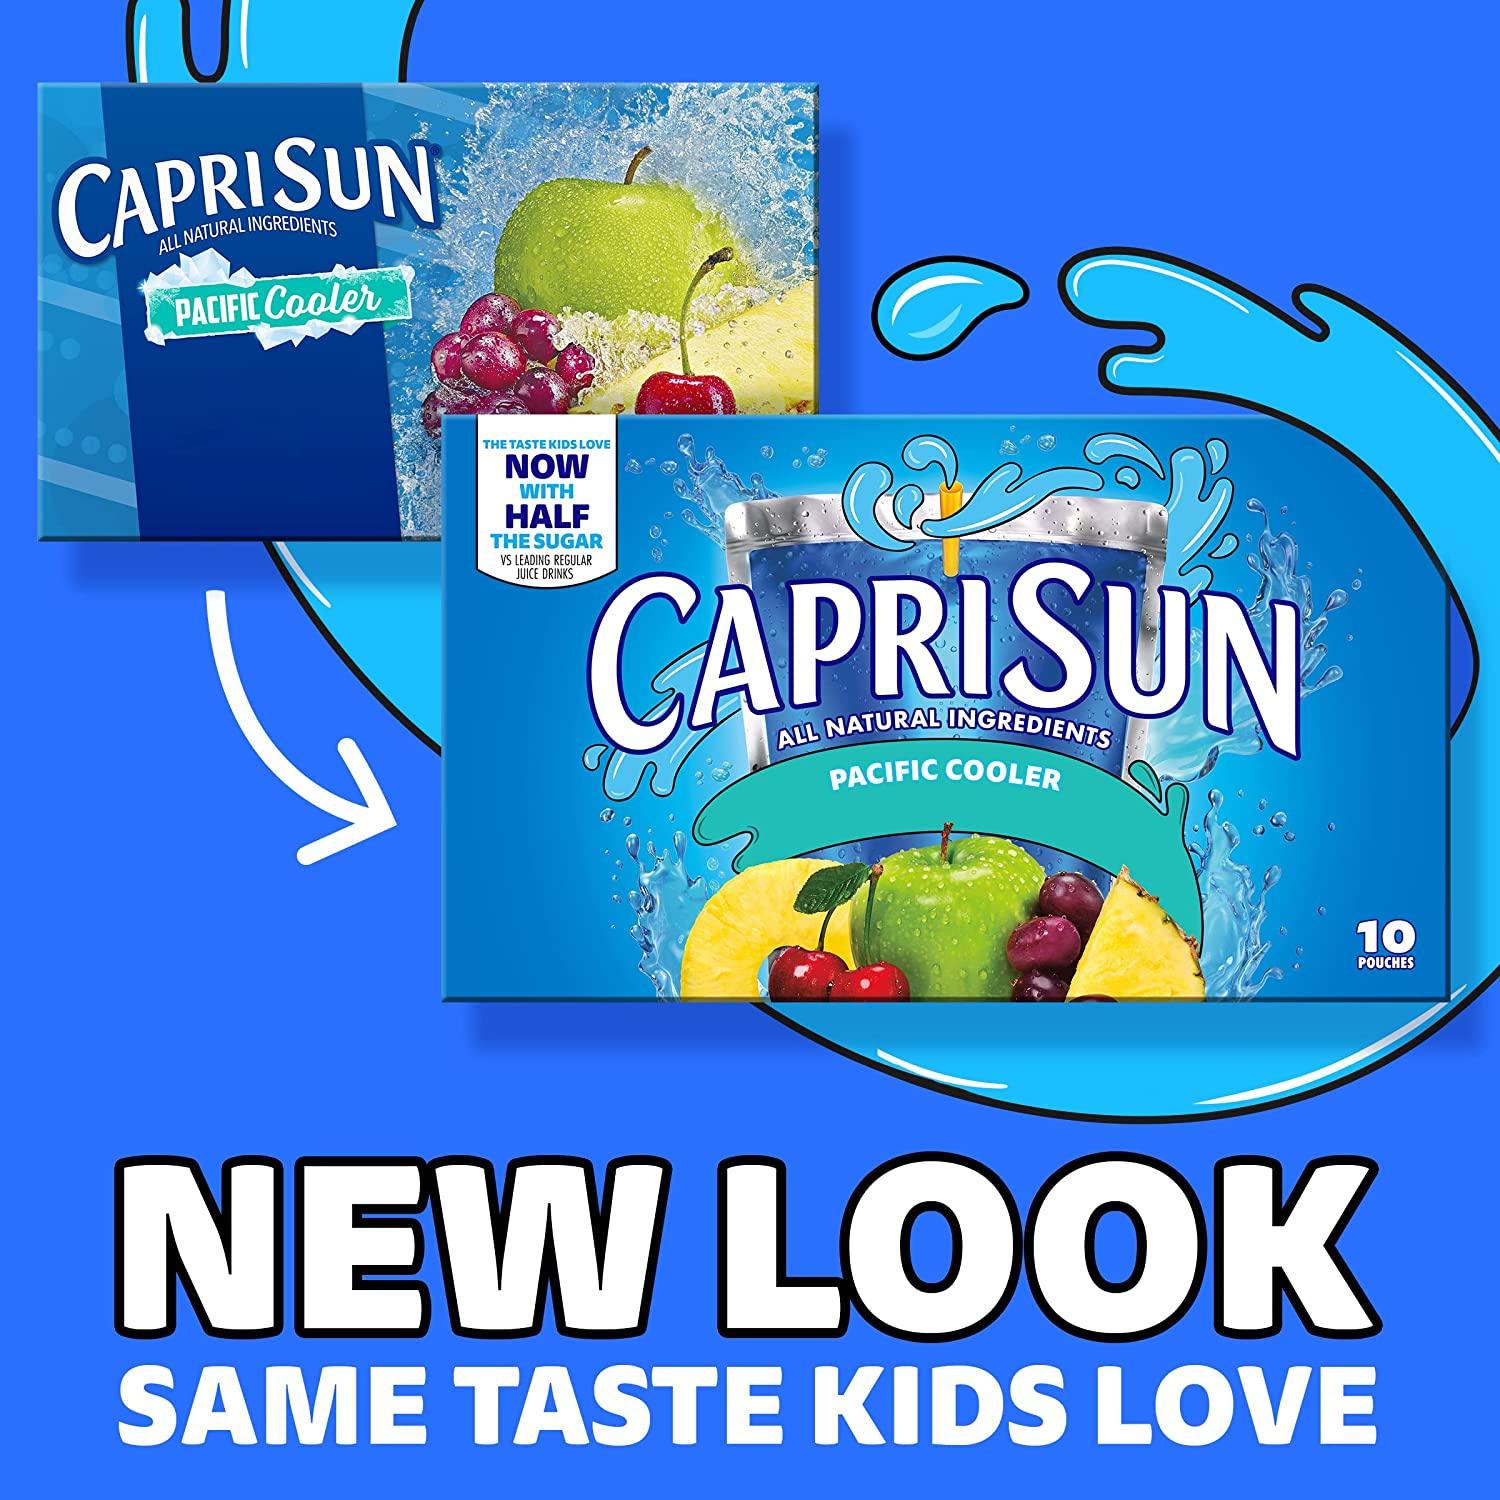 Capri Sun Flavored Juice Drink Blend Variety Pack, 40 ct./6 fl. oz.